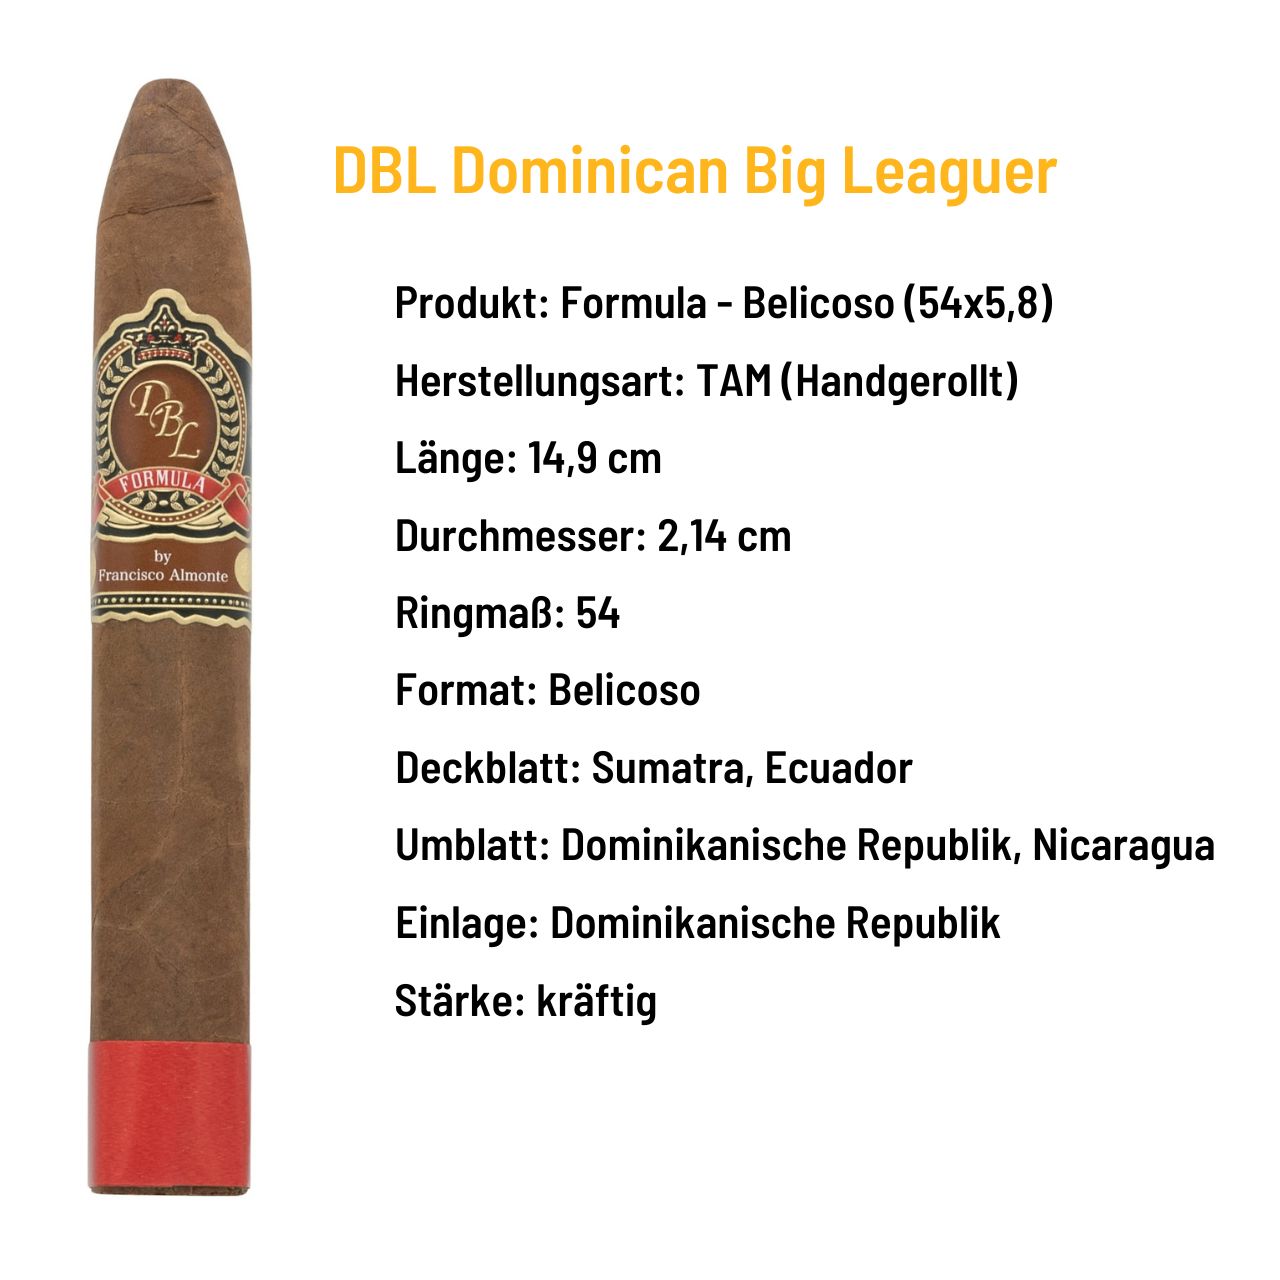 DBL Dominican Big Leaguer - Formula Belicoso - Dominikanische Republik